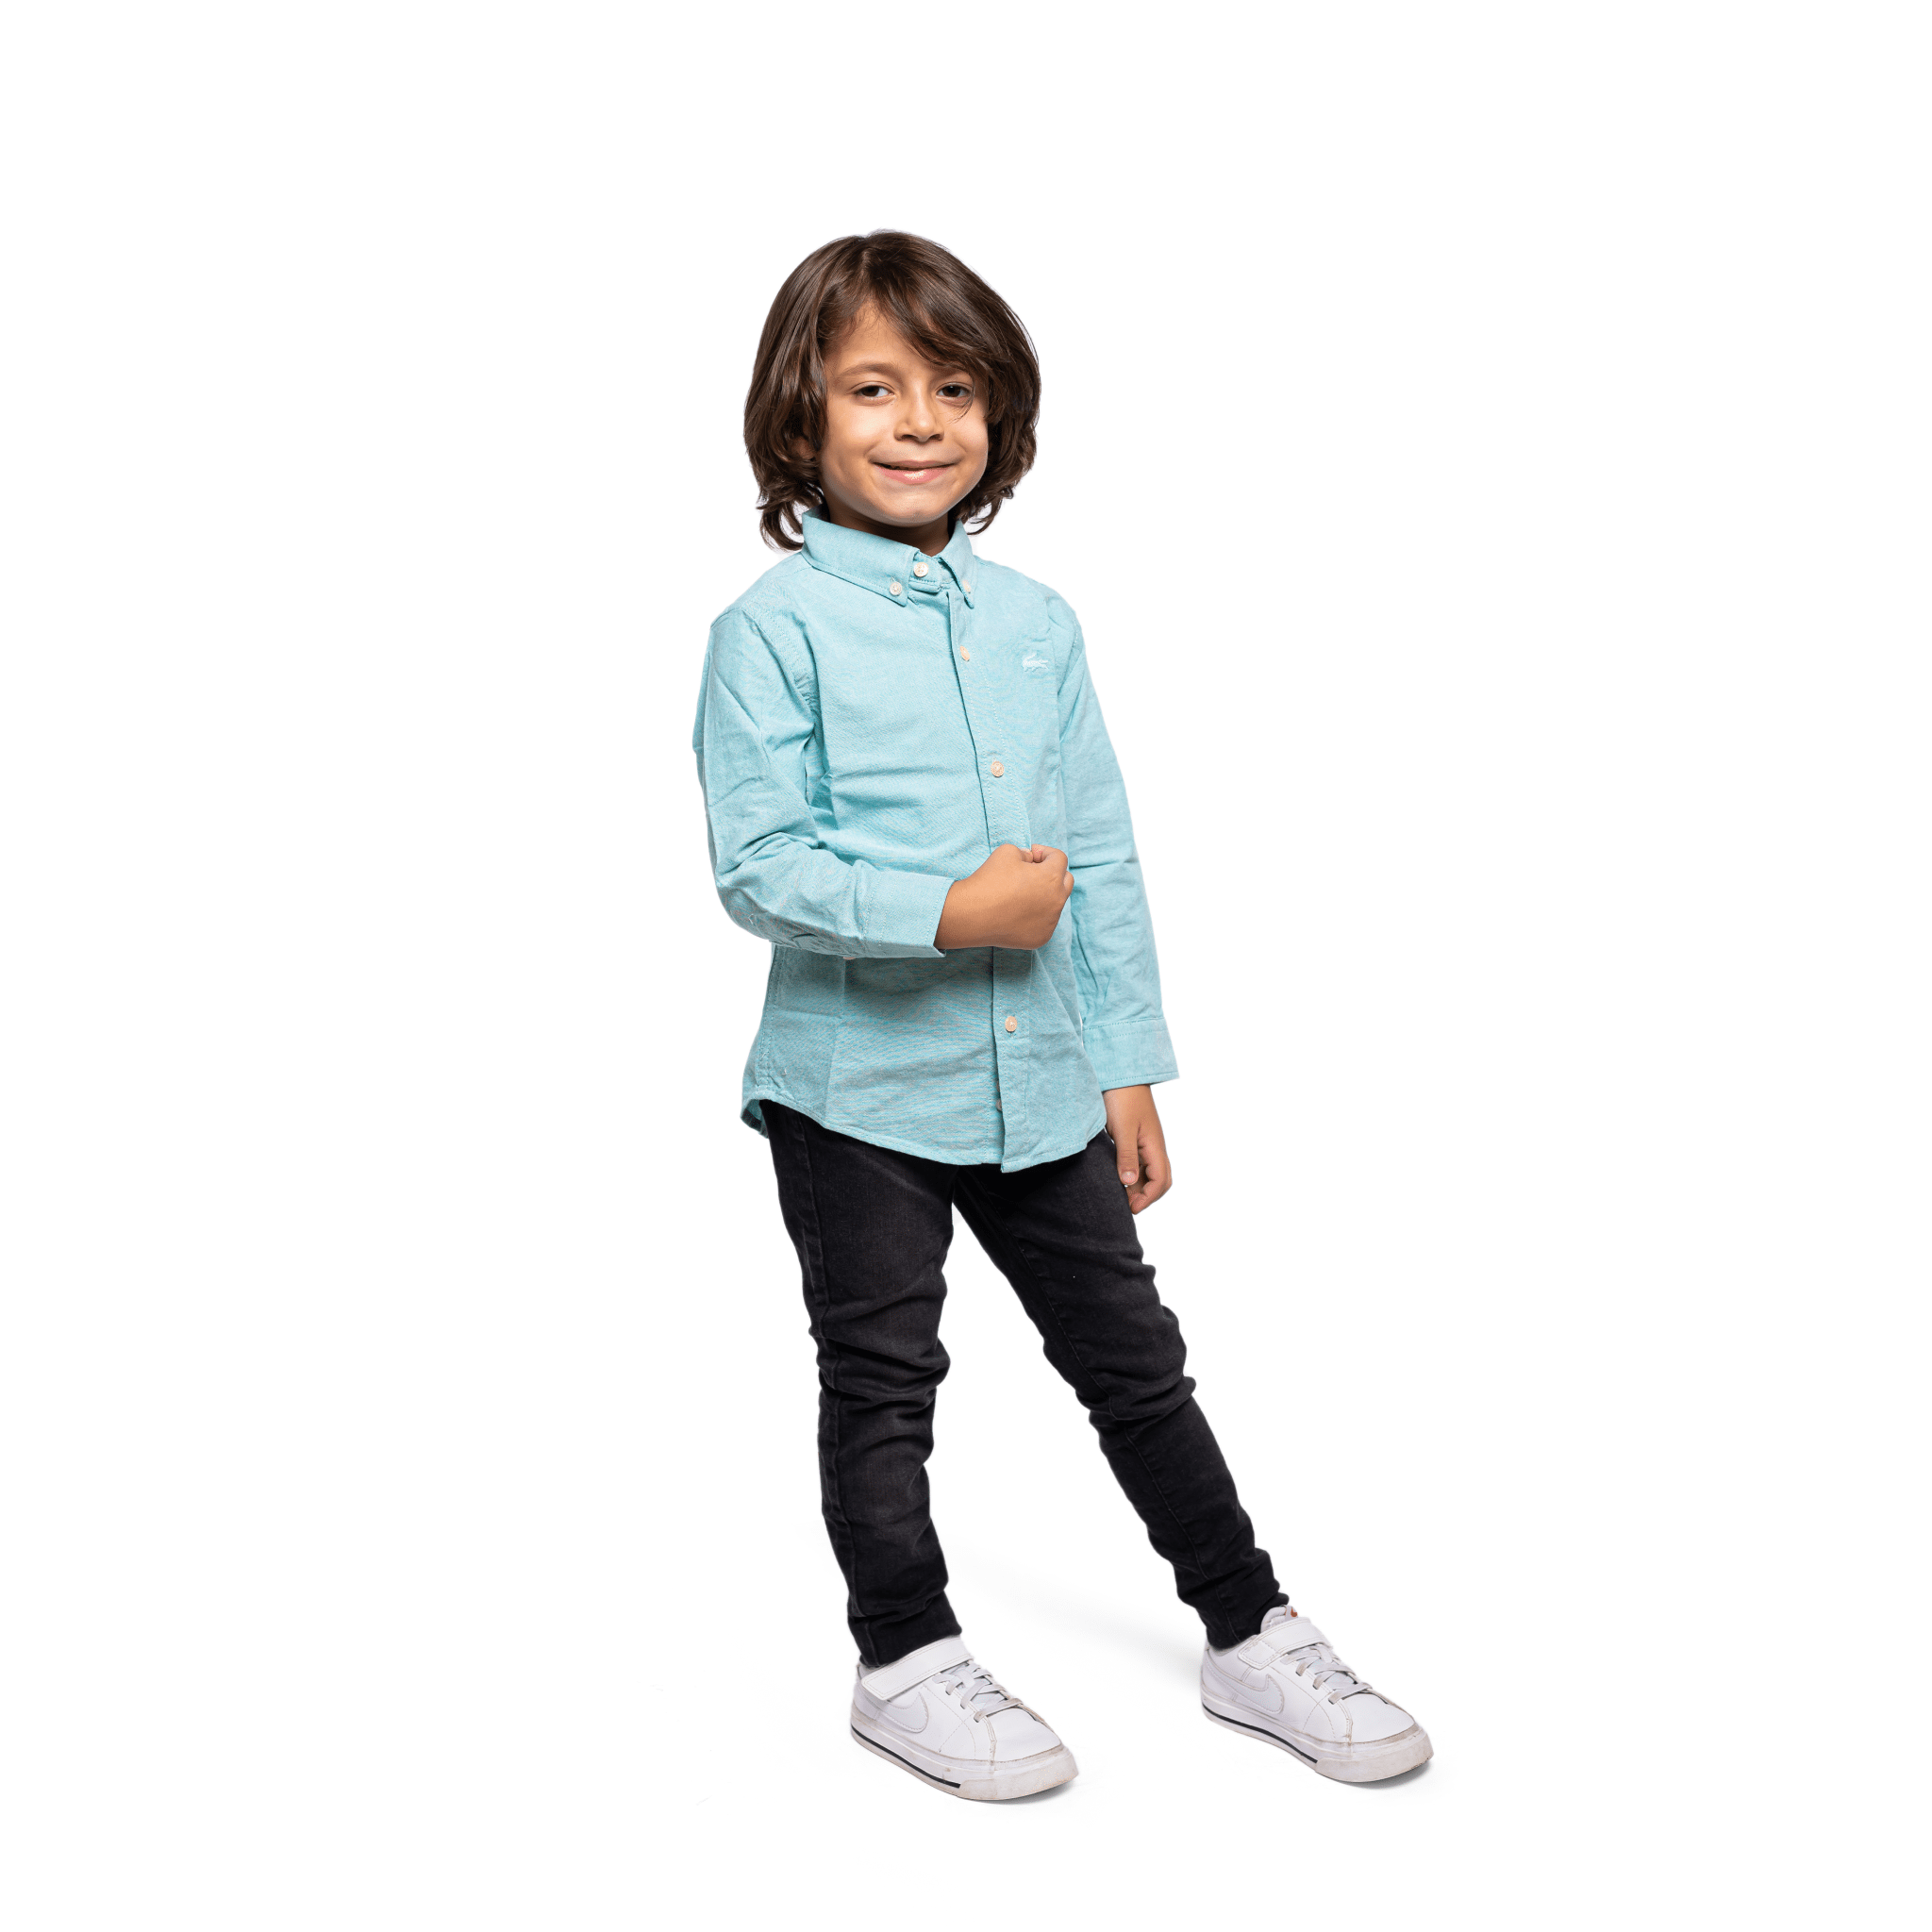 ElOutlet-Sumer Kids Kids Shirts [Kids] Long Sleeves Shirt - Green